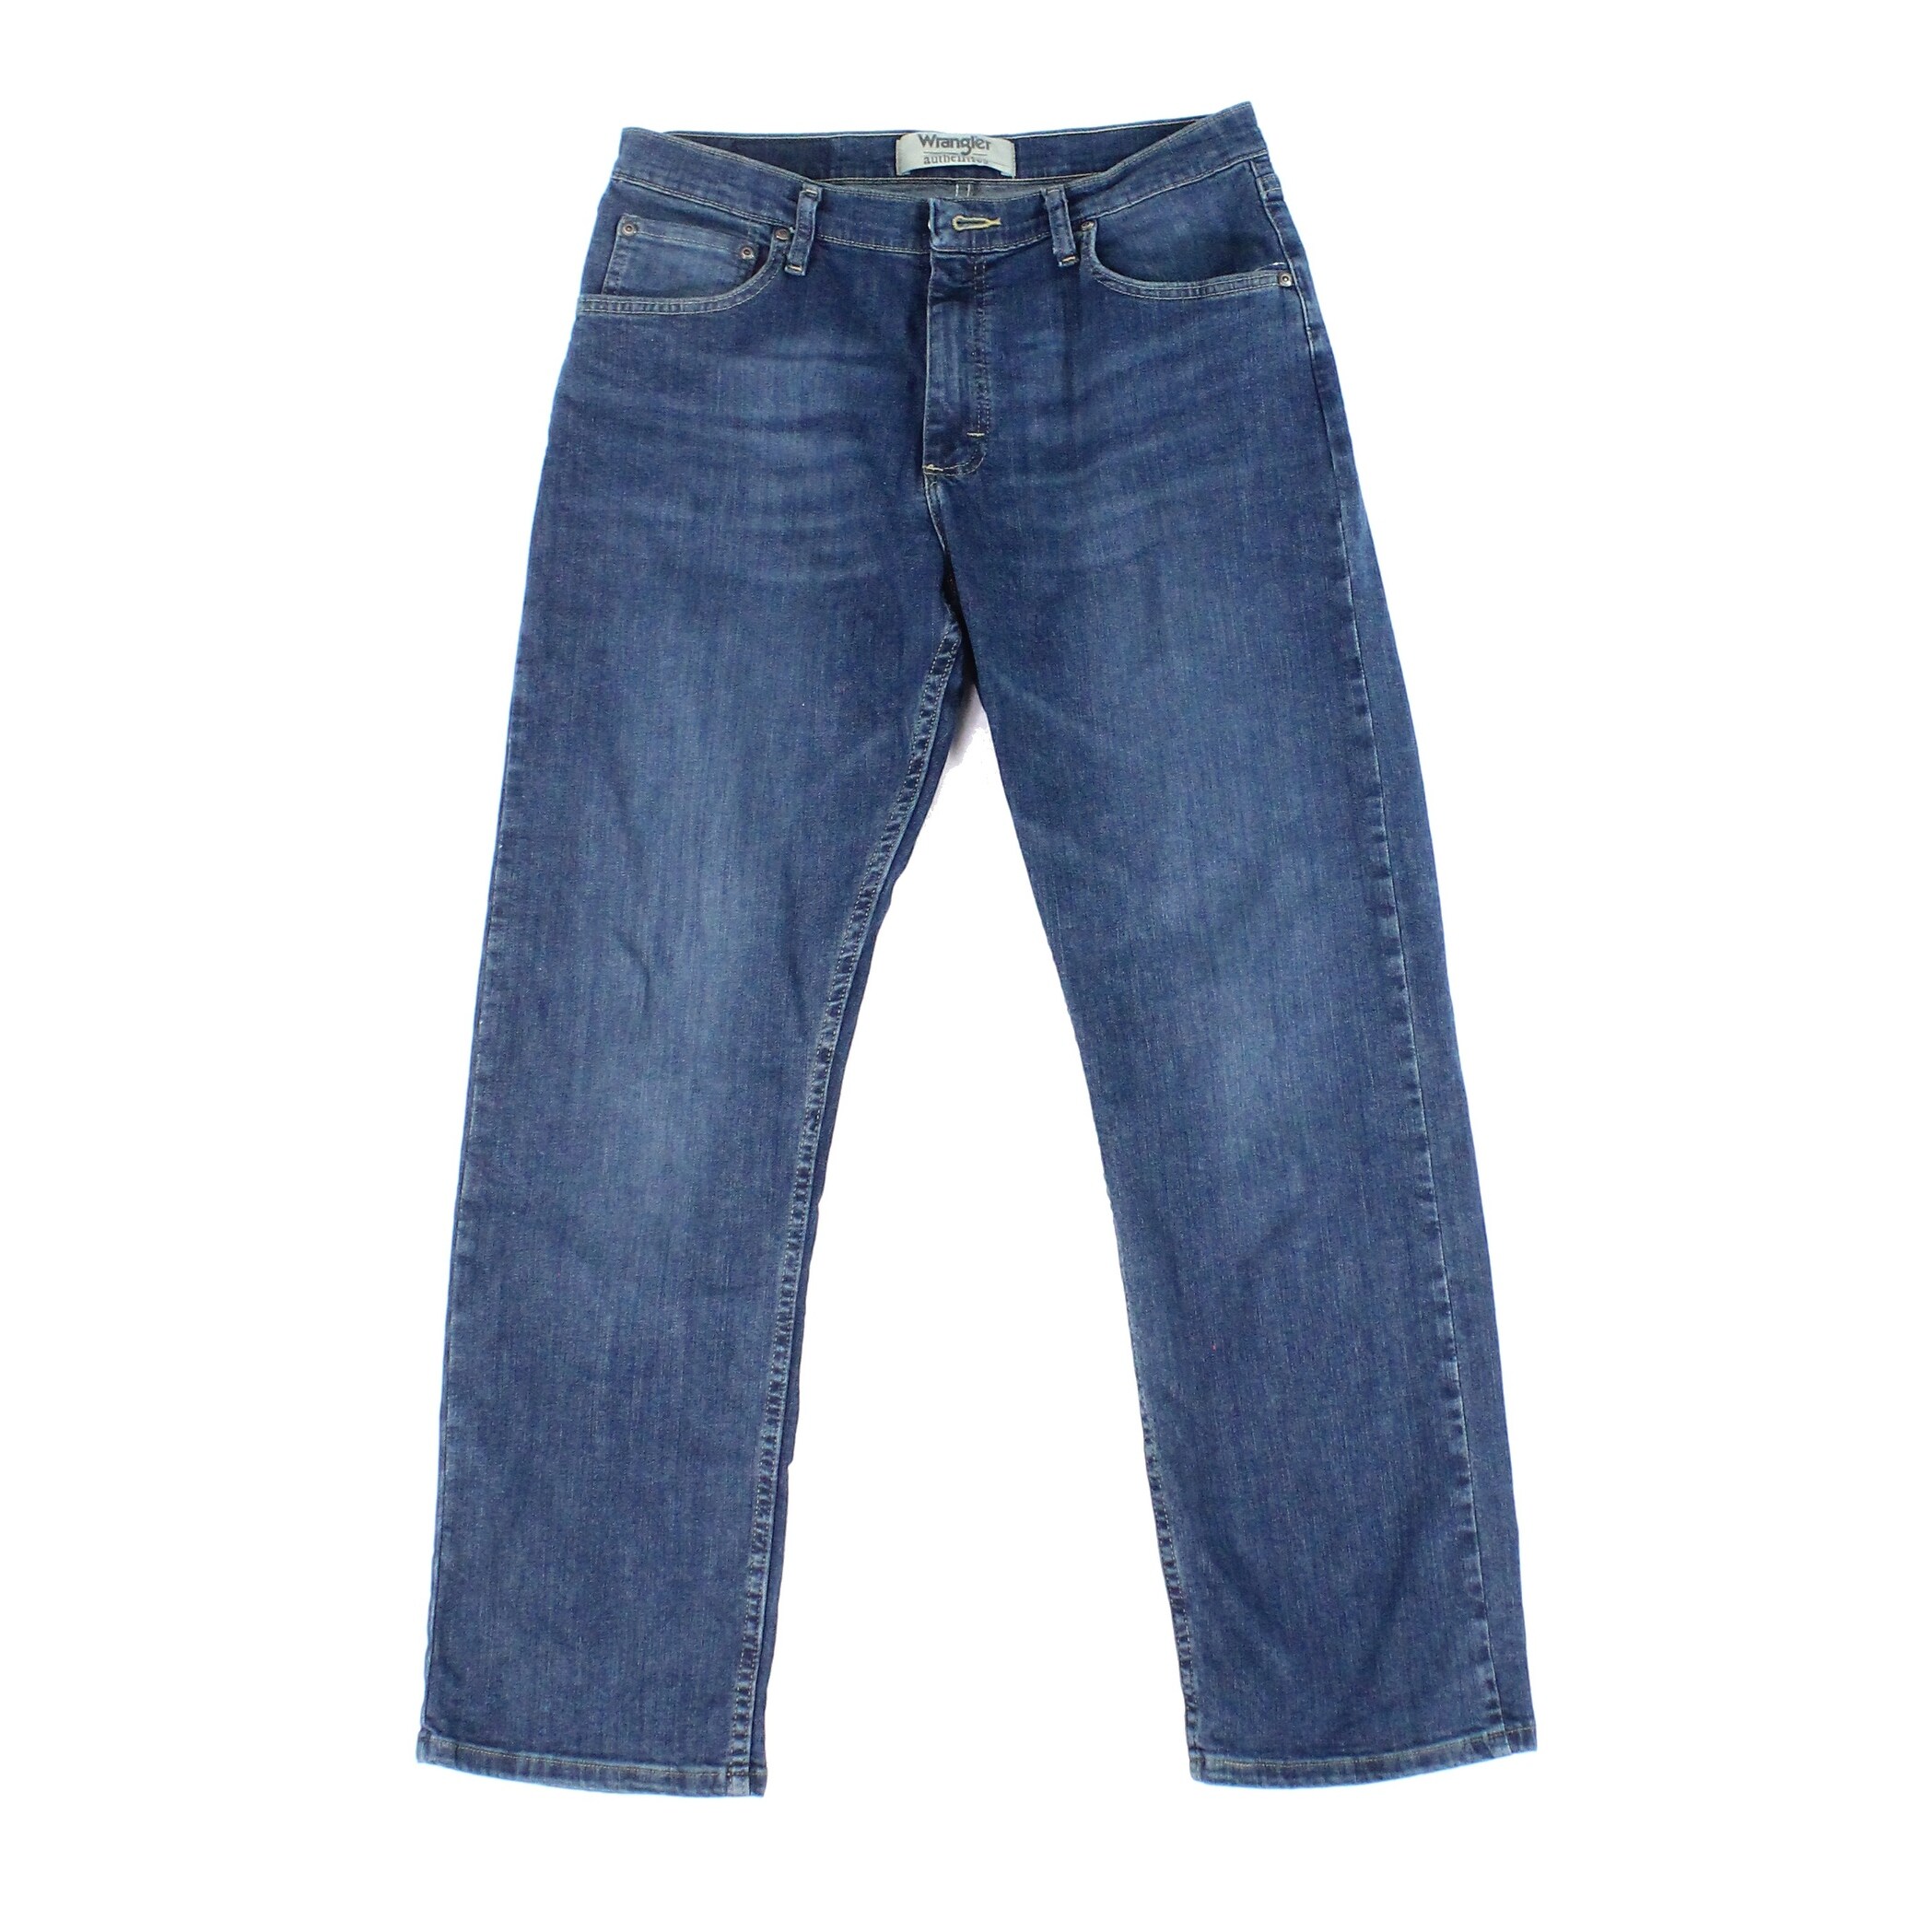 wrangler 32x29 jeans